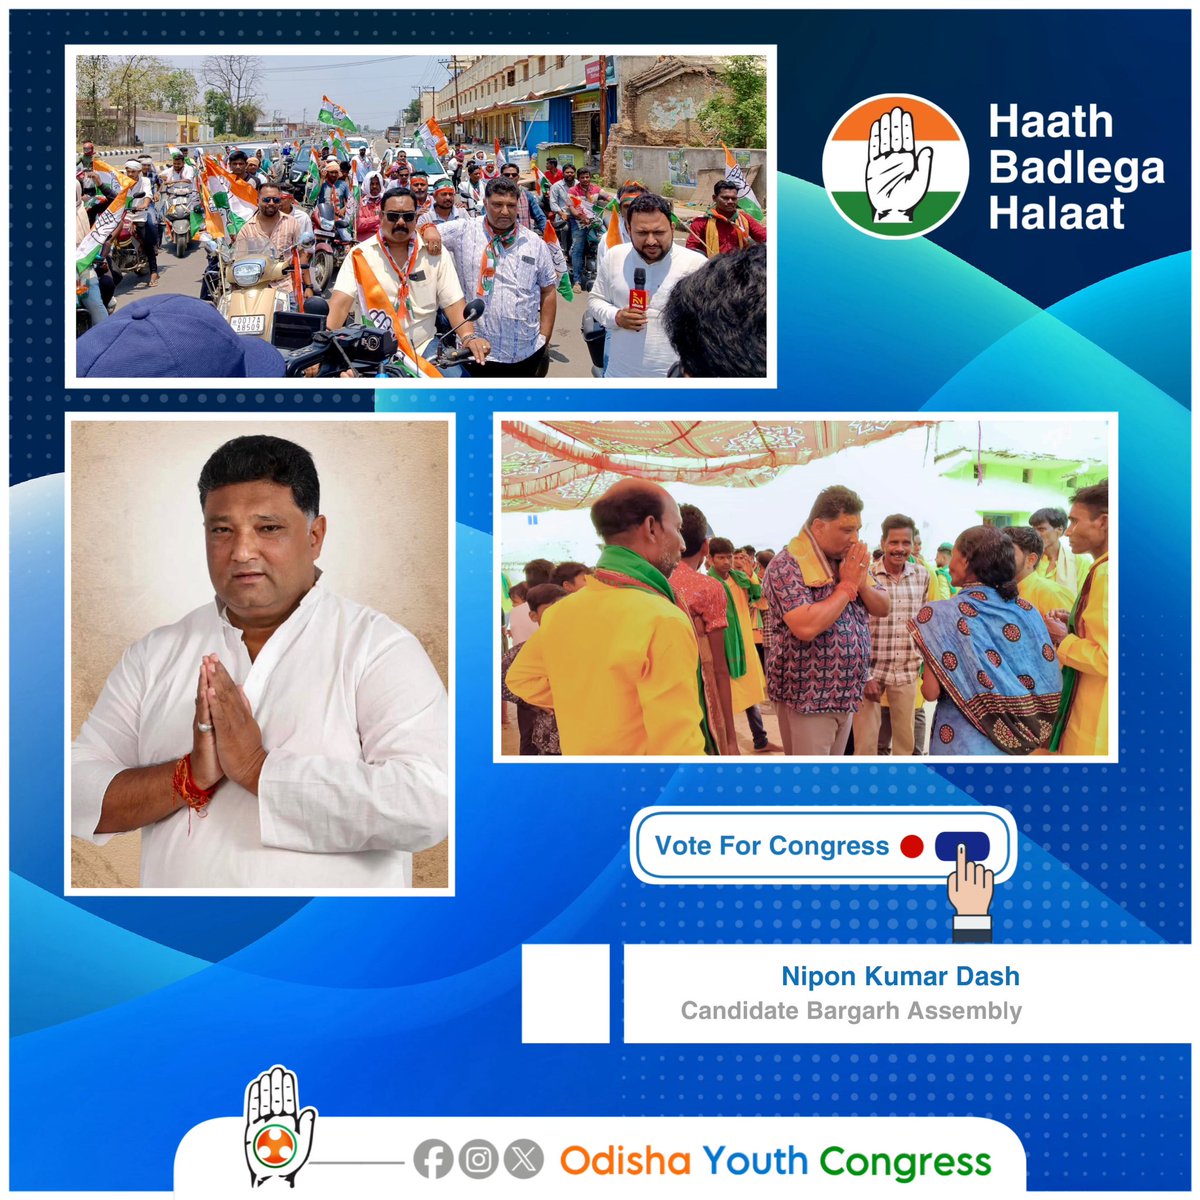 Vote For Congress ✋
Vote For Nipon Kumar Dash
Candidate Bargarh Assembly

#HaathBadlegaHalaat 
#AsuchiCongress